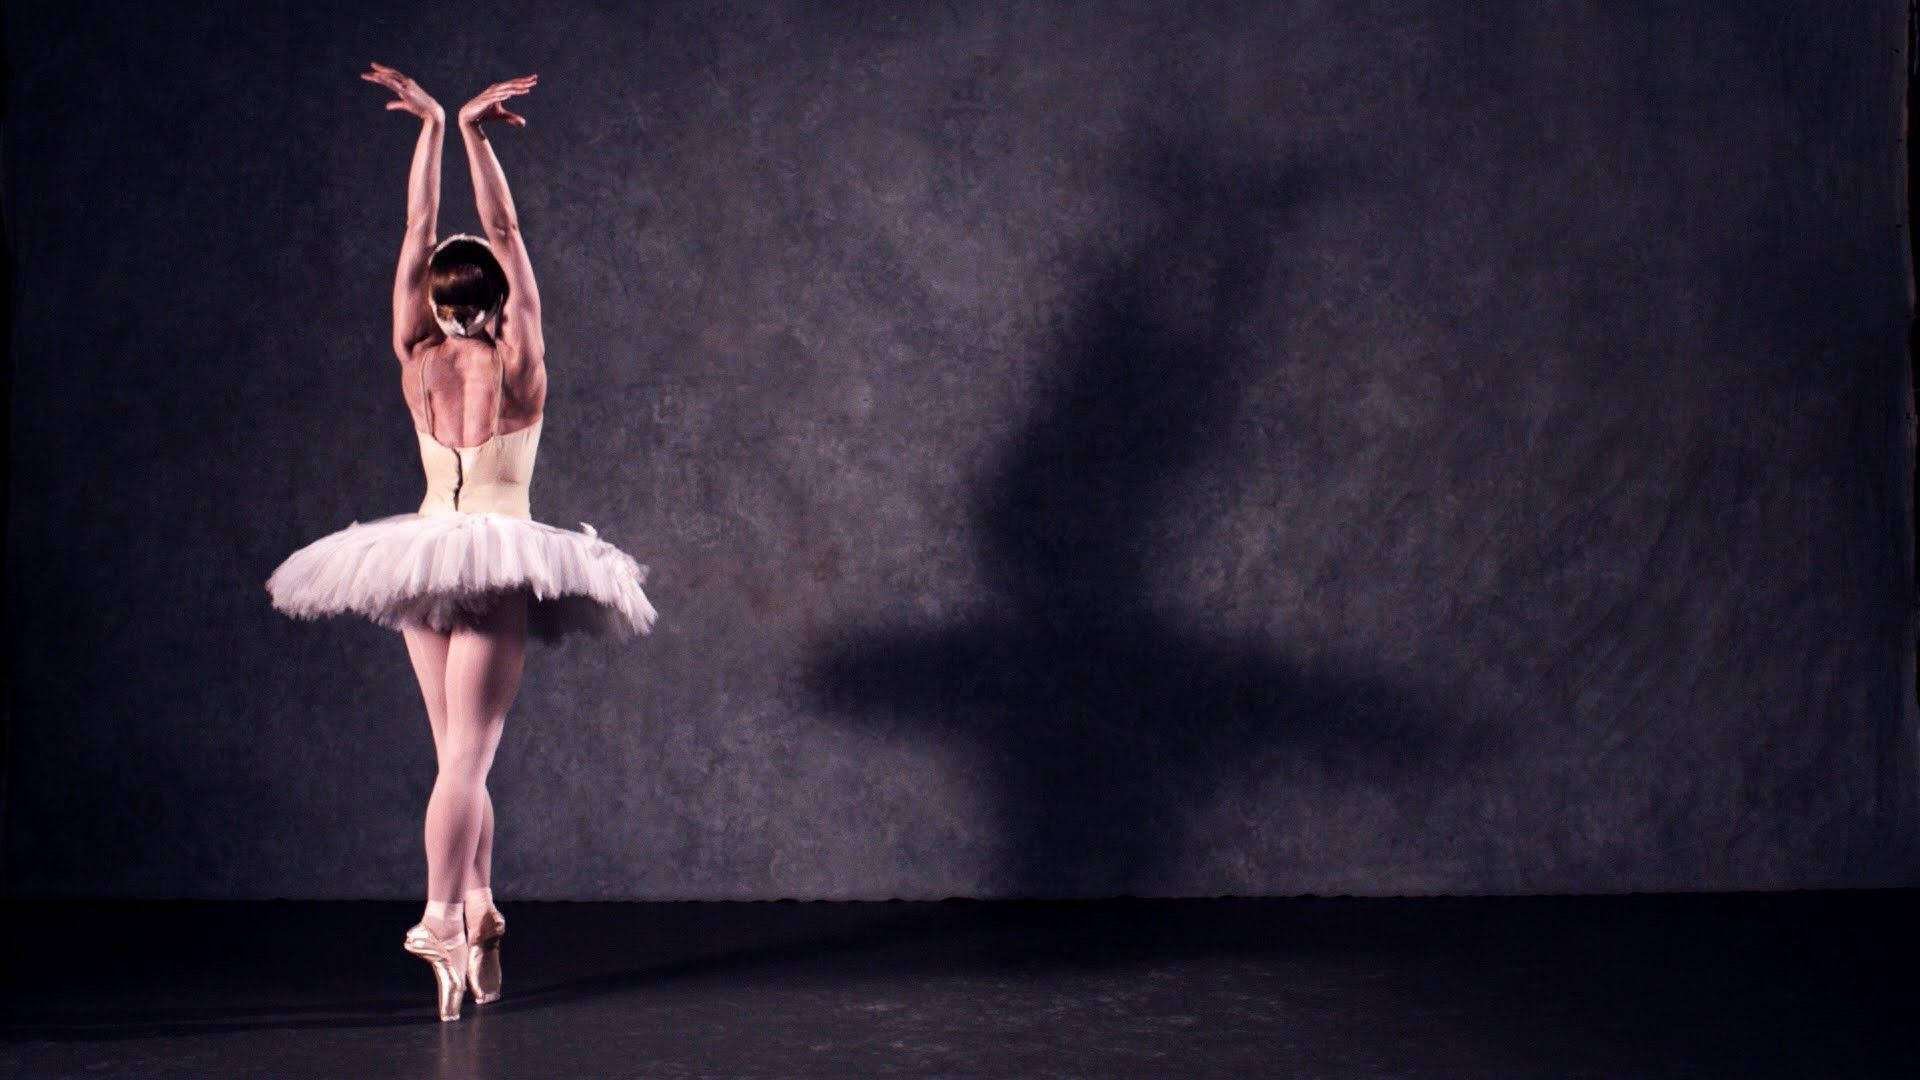 Ballerina Shadow Figure Dance Pose Wallpaper